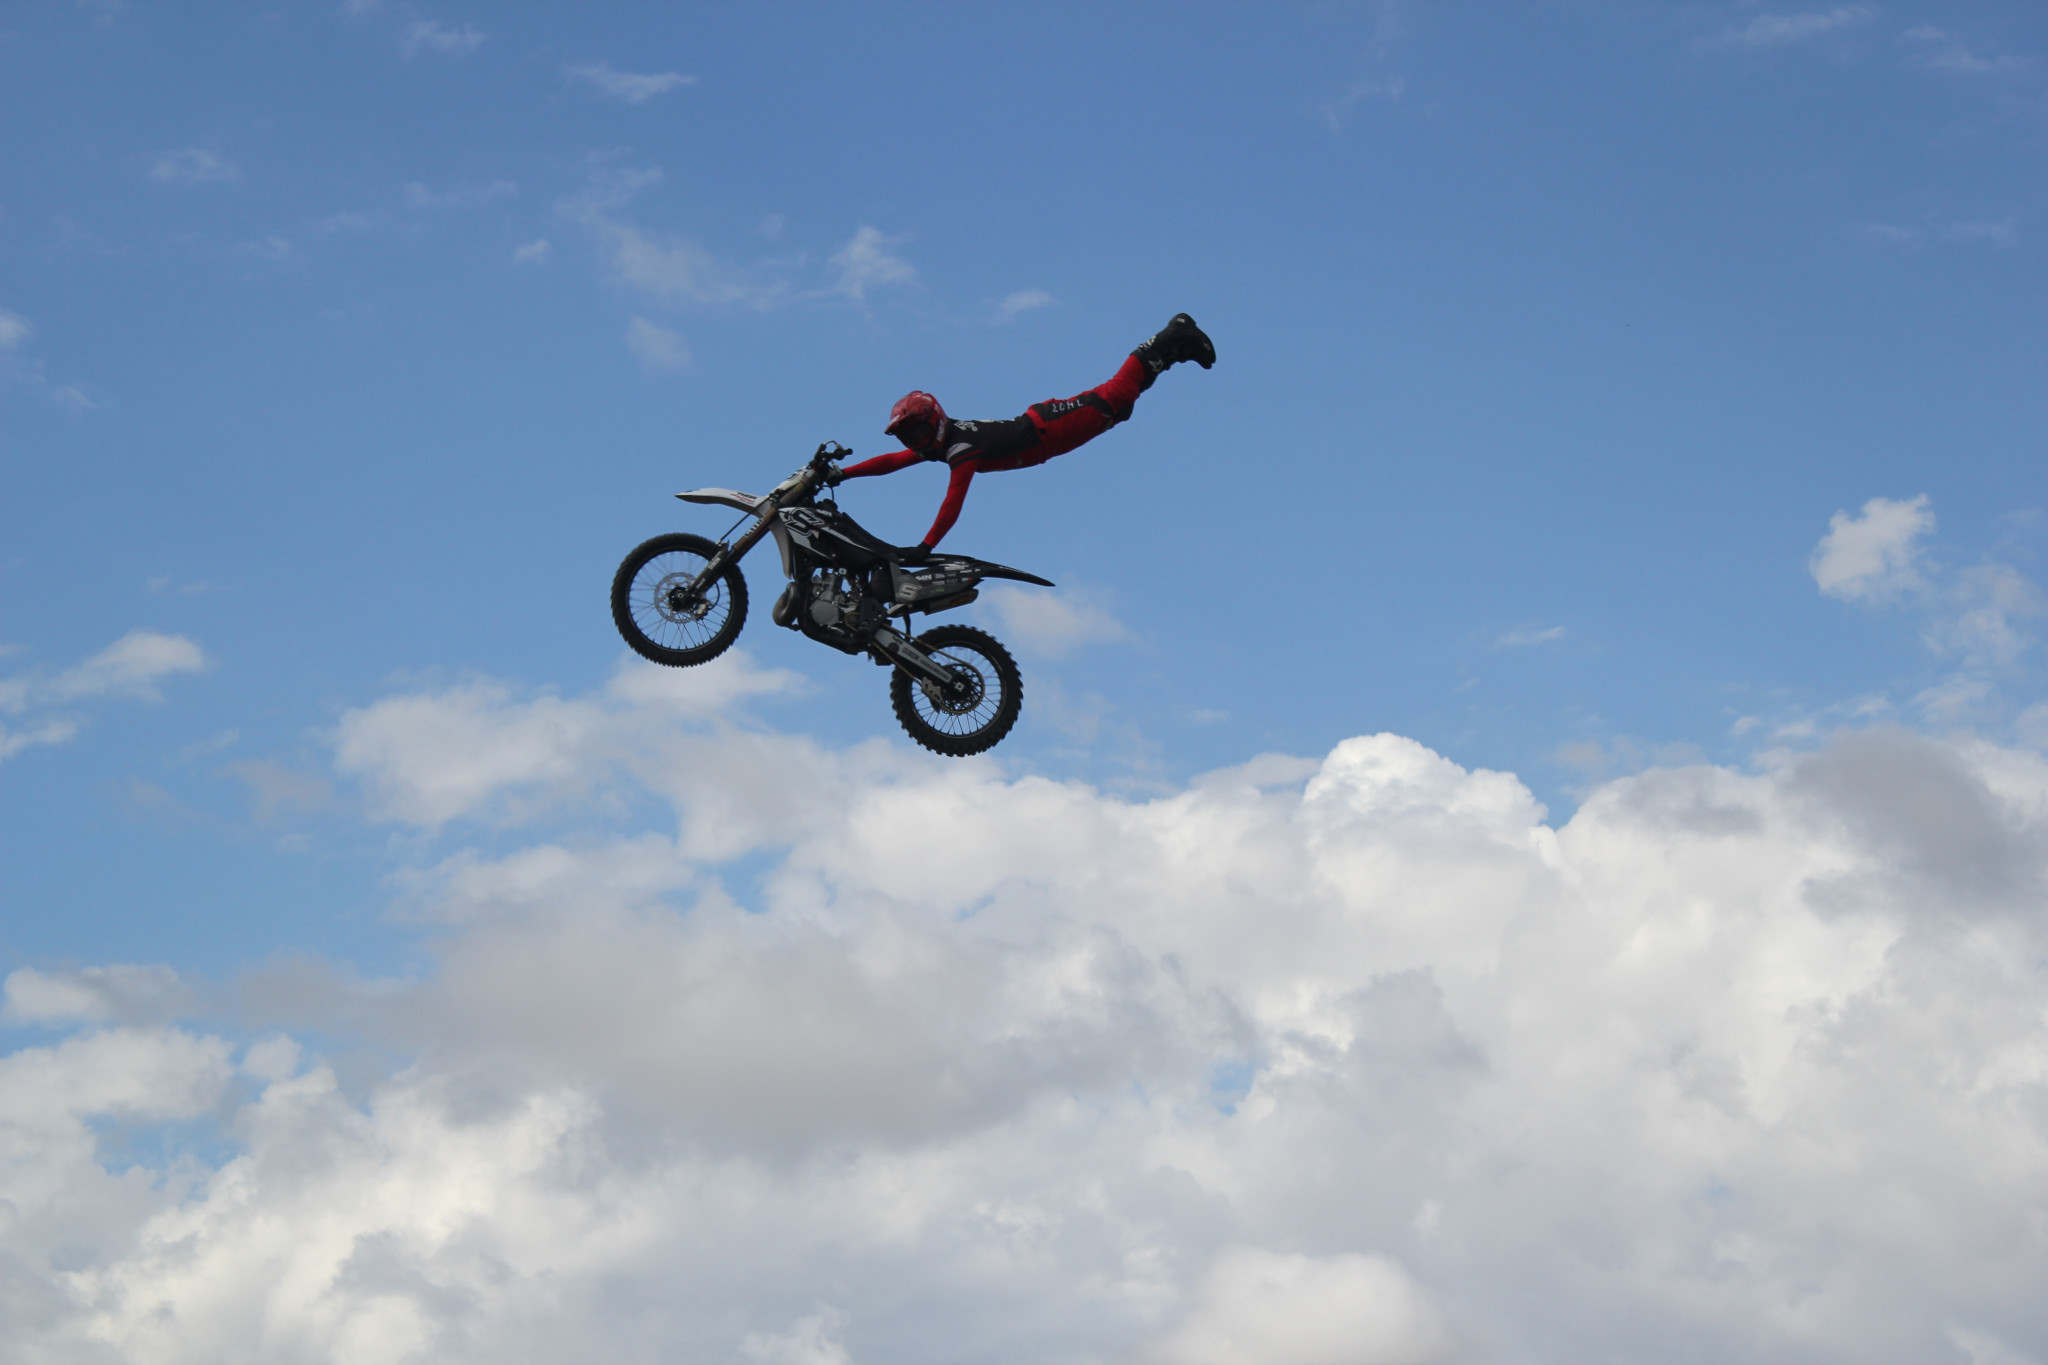 Aussie FMX brings motorcoss thrills - feature photo